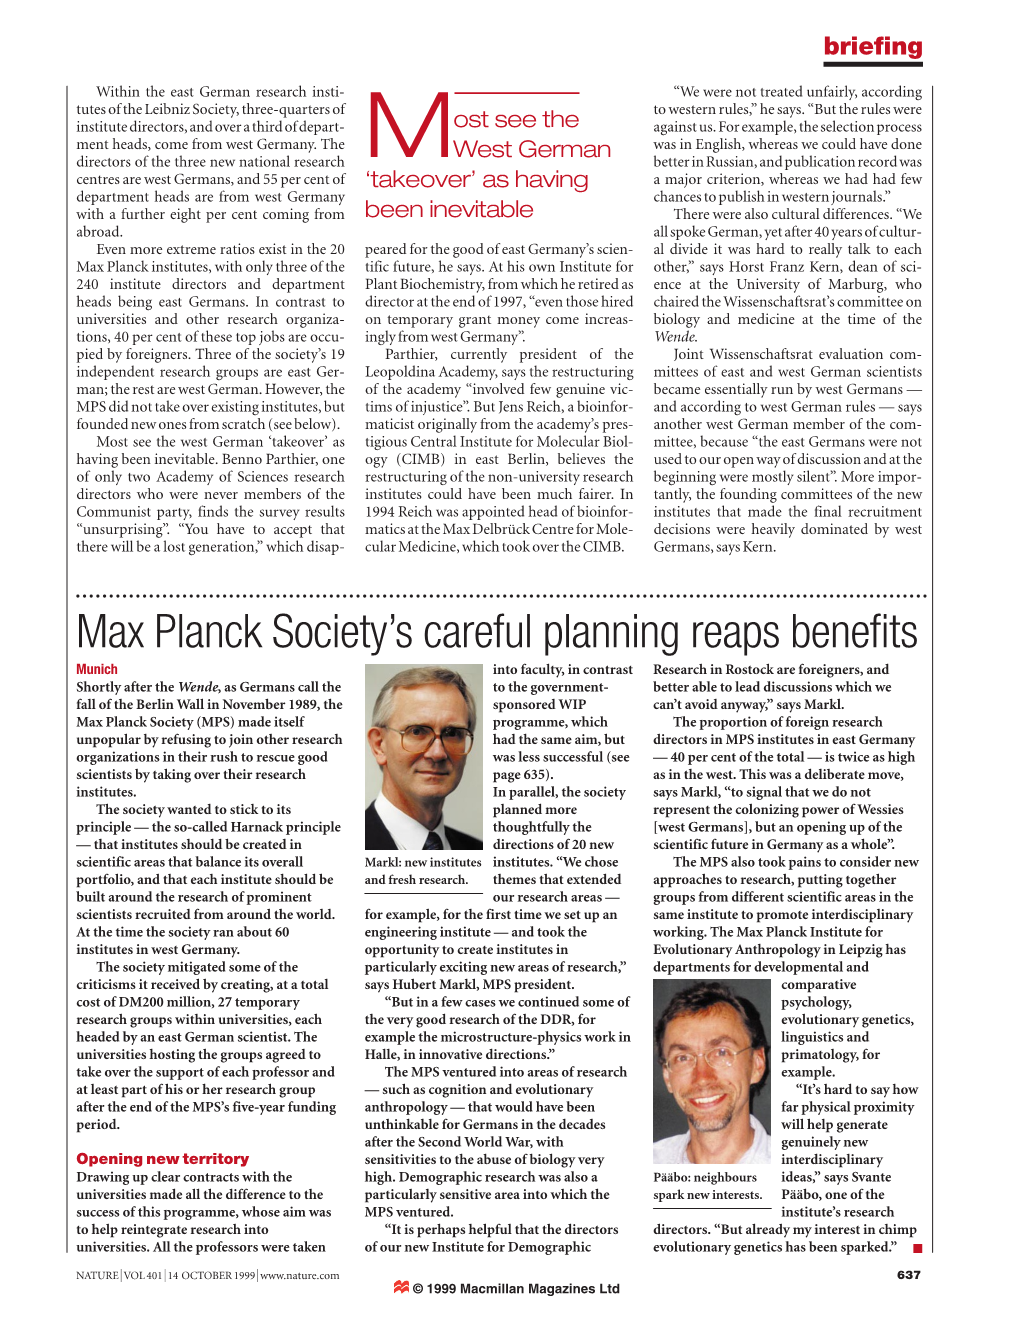 Max Planck Society's Careful Planning Reaps Benefits